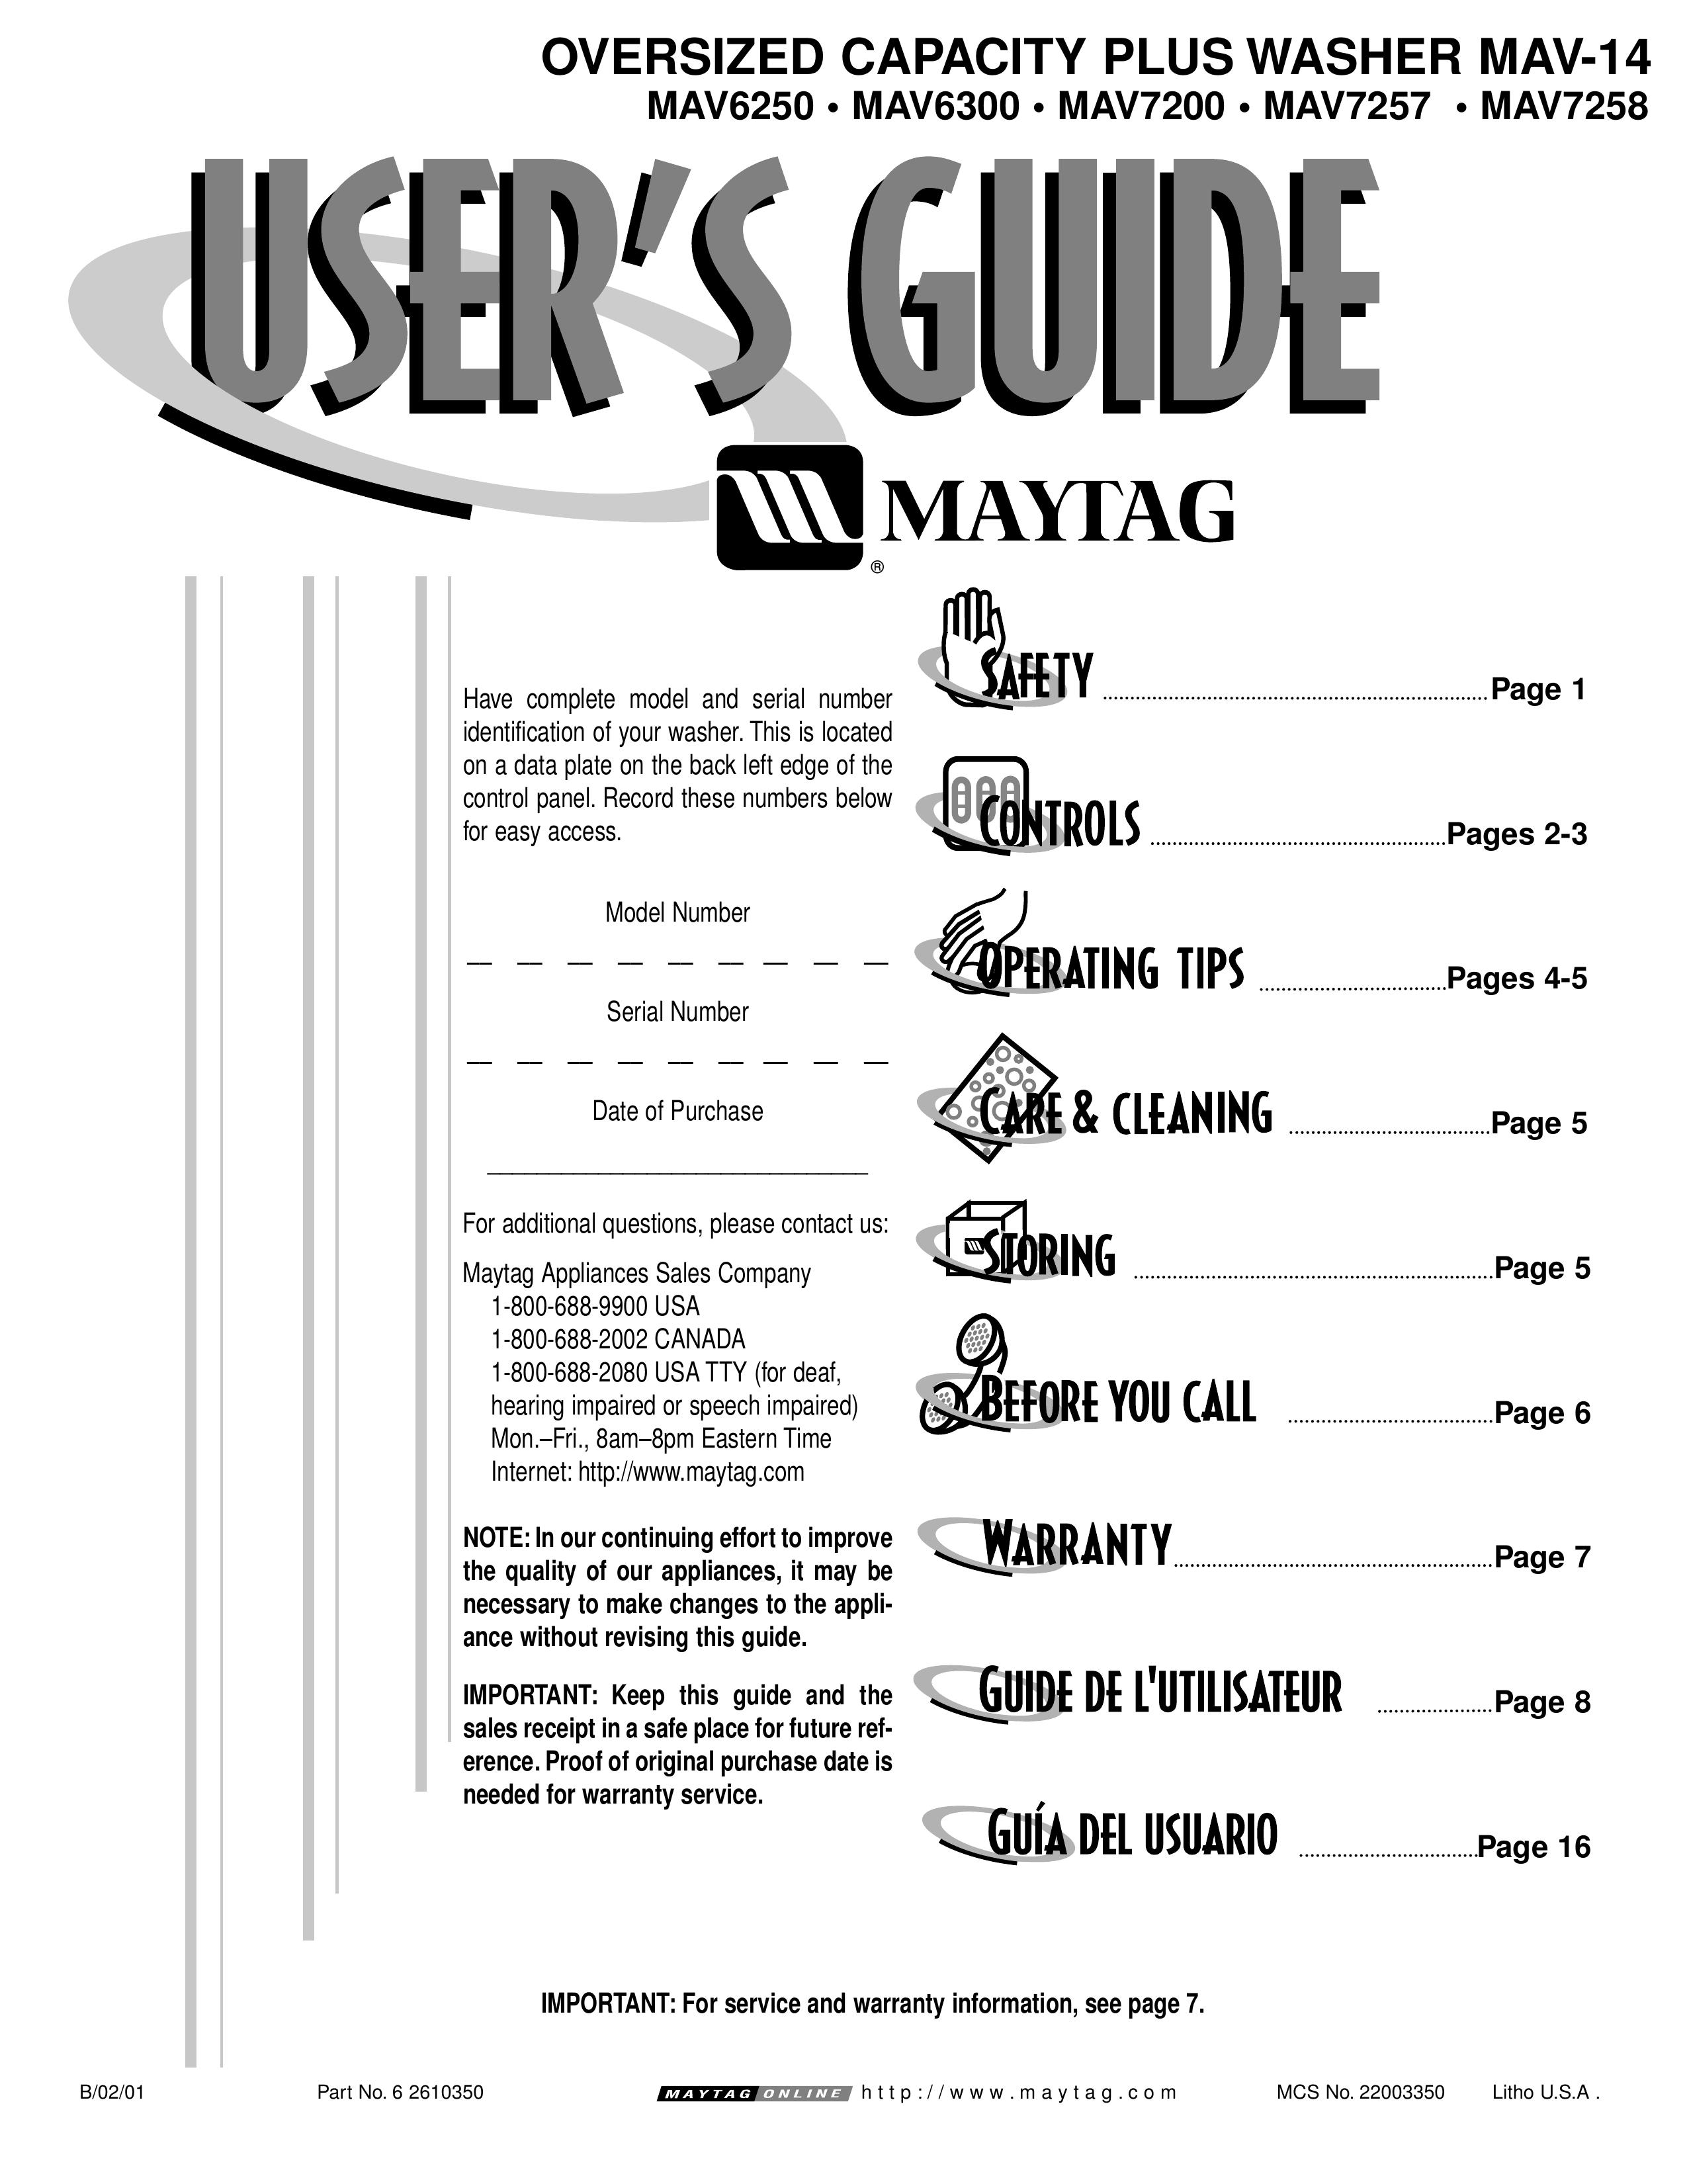 Maytag MAV7257 Washer/Dryer User Manual